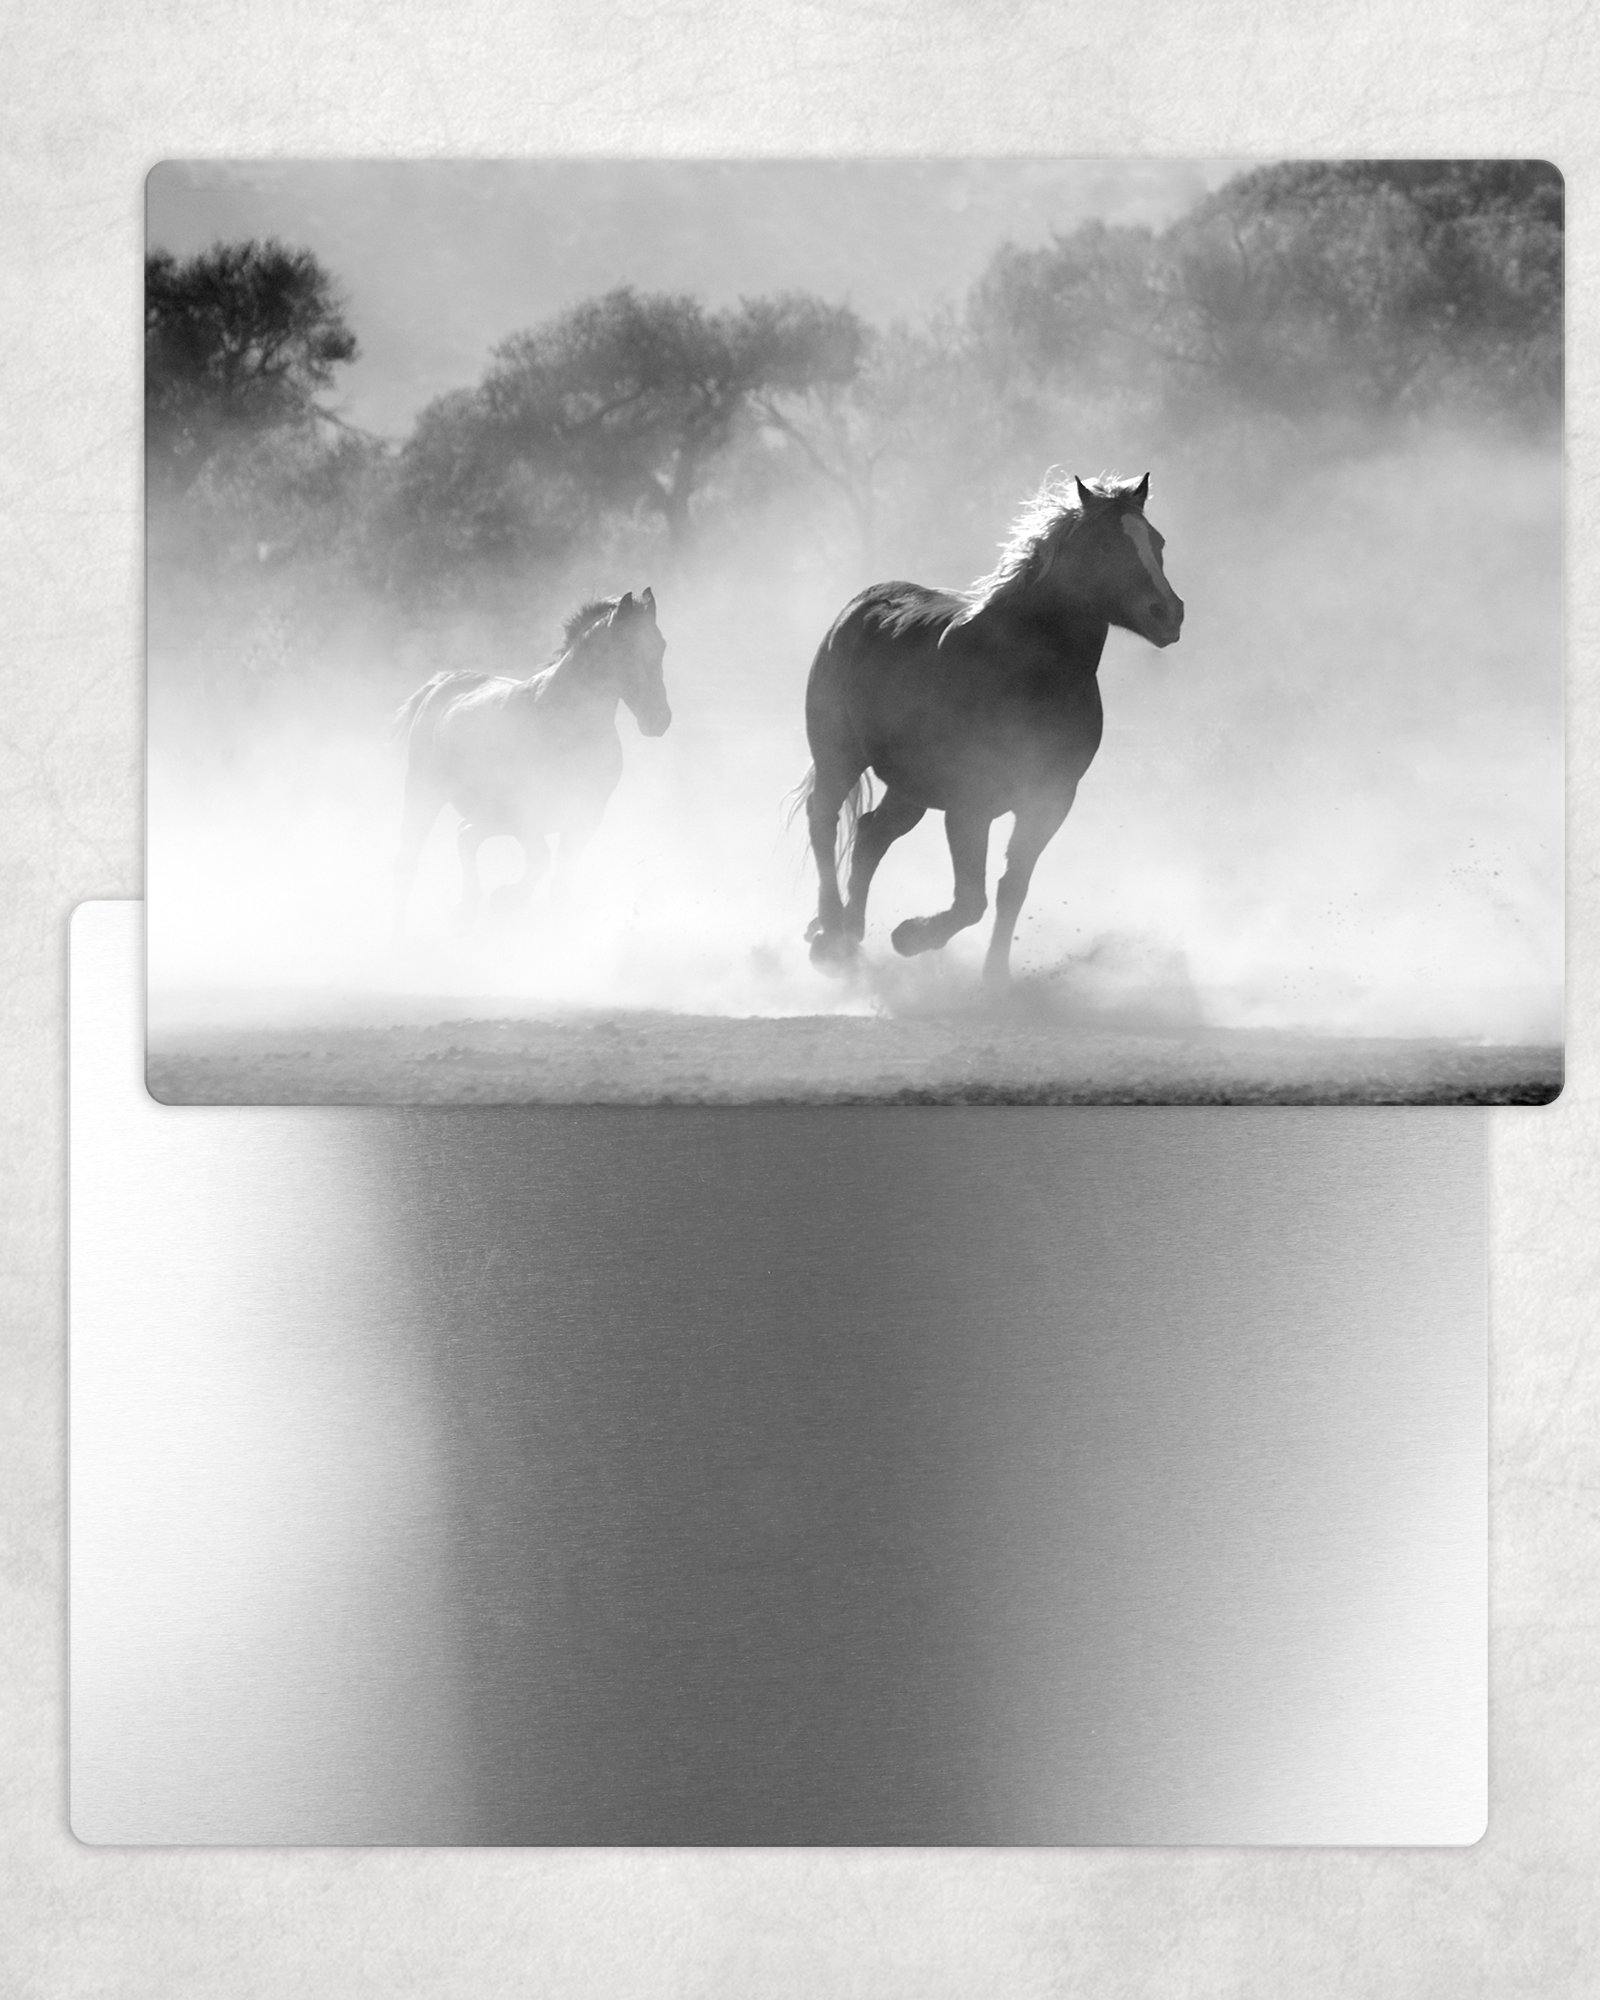 Charging Horses - B&W Metal Photo Panel - 8x12 or 12x18 - Schoppix Gifts